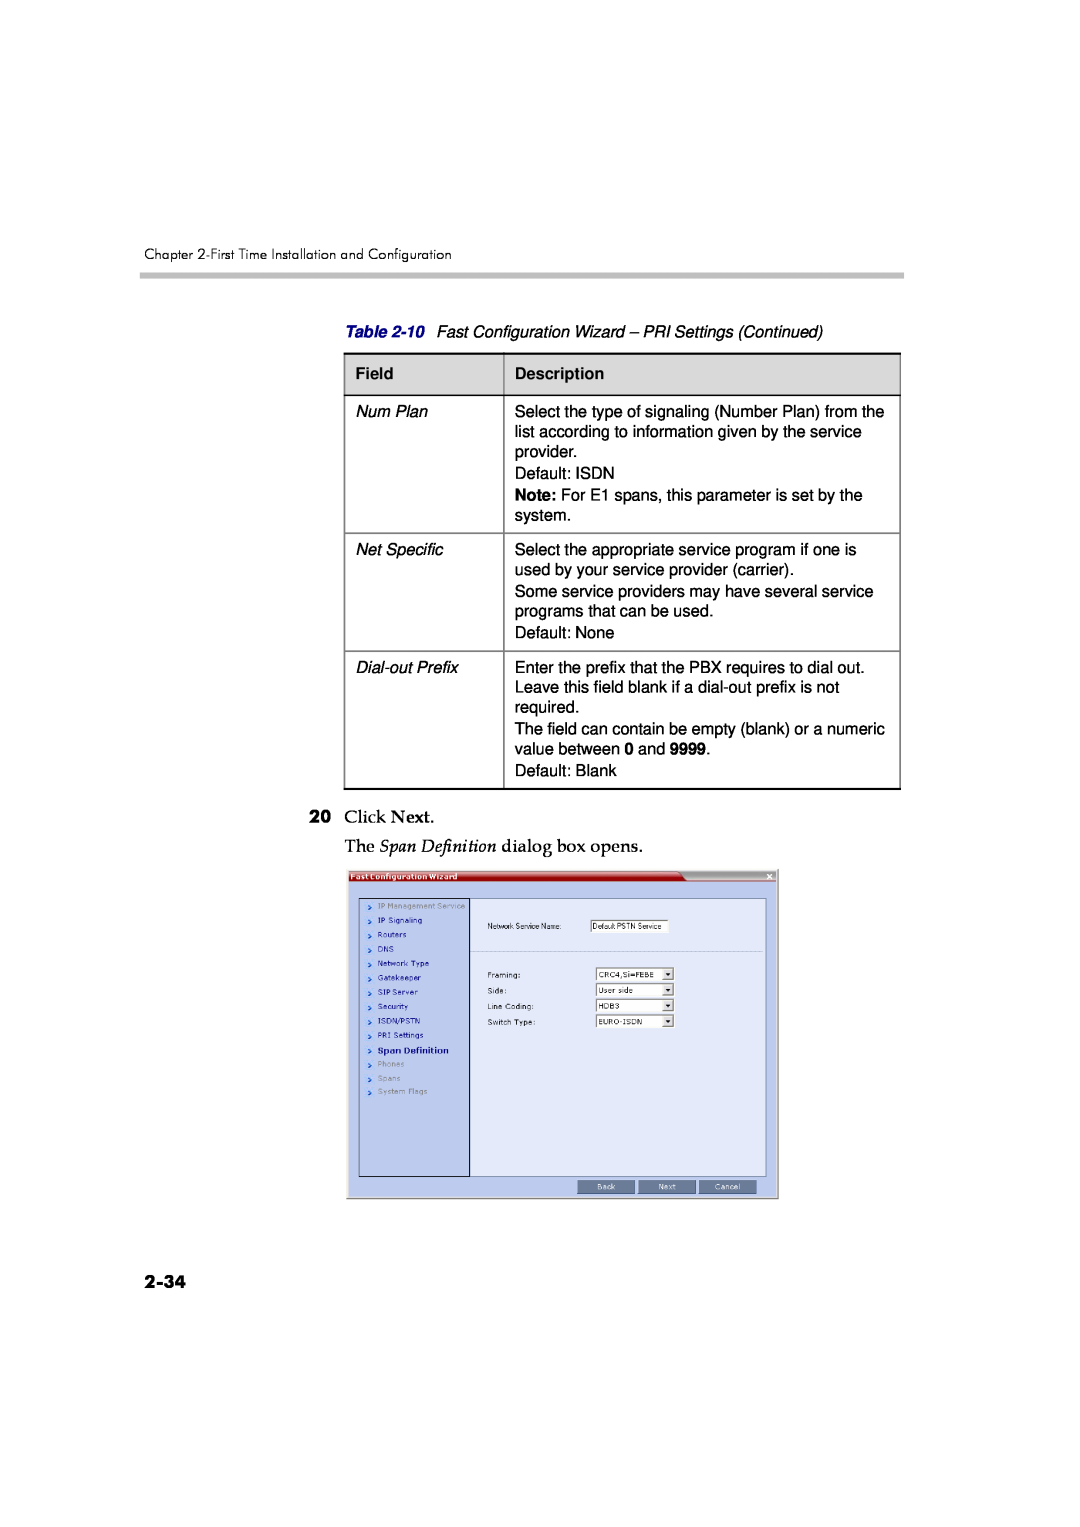 Polycom DOC2560A manual 2-34, Click Next The Span Definition dialog box opens, Field, Description 